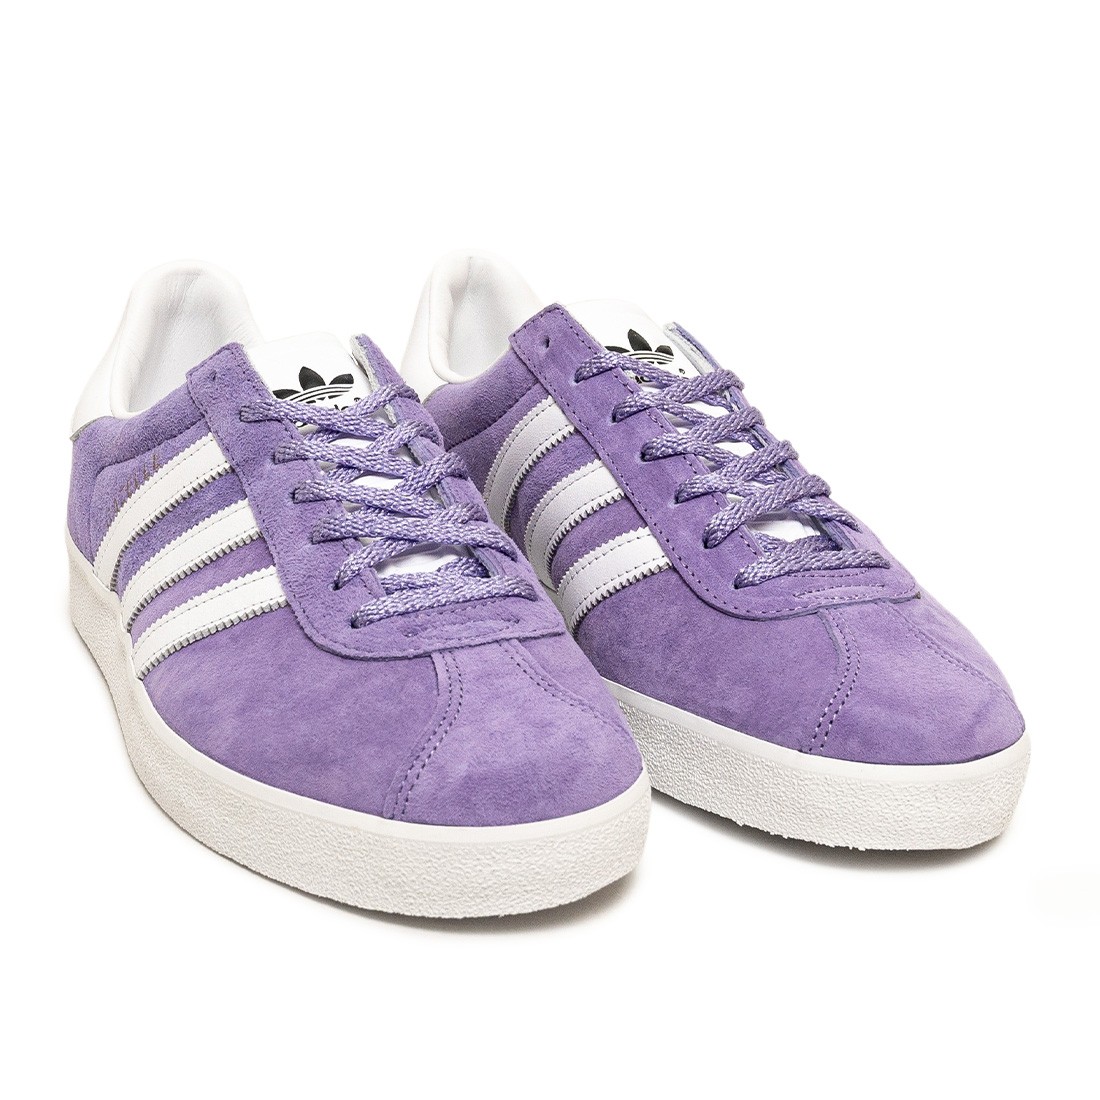 Confidencial medias Asser Adidas Men Gazelle 85 purple magic lilac footwear white core black